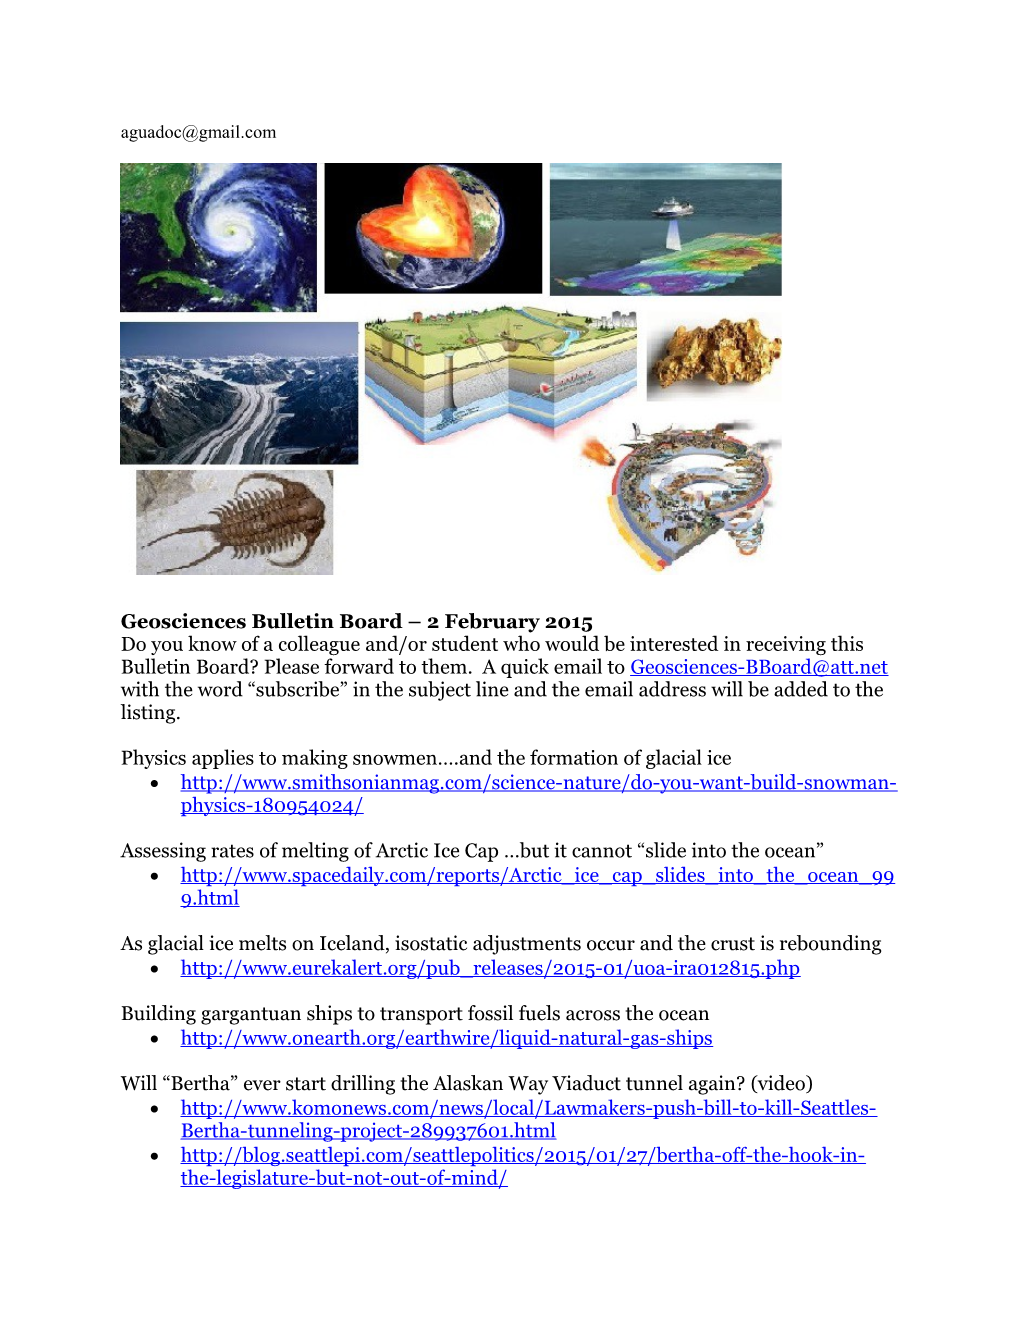 Geosciences Bulletin Board 2 February 2015